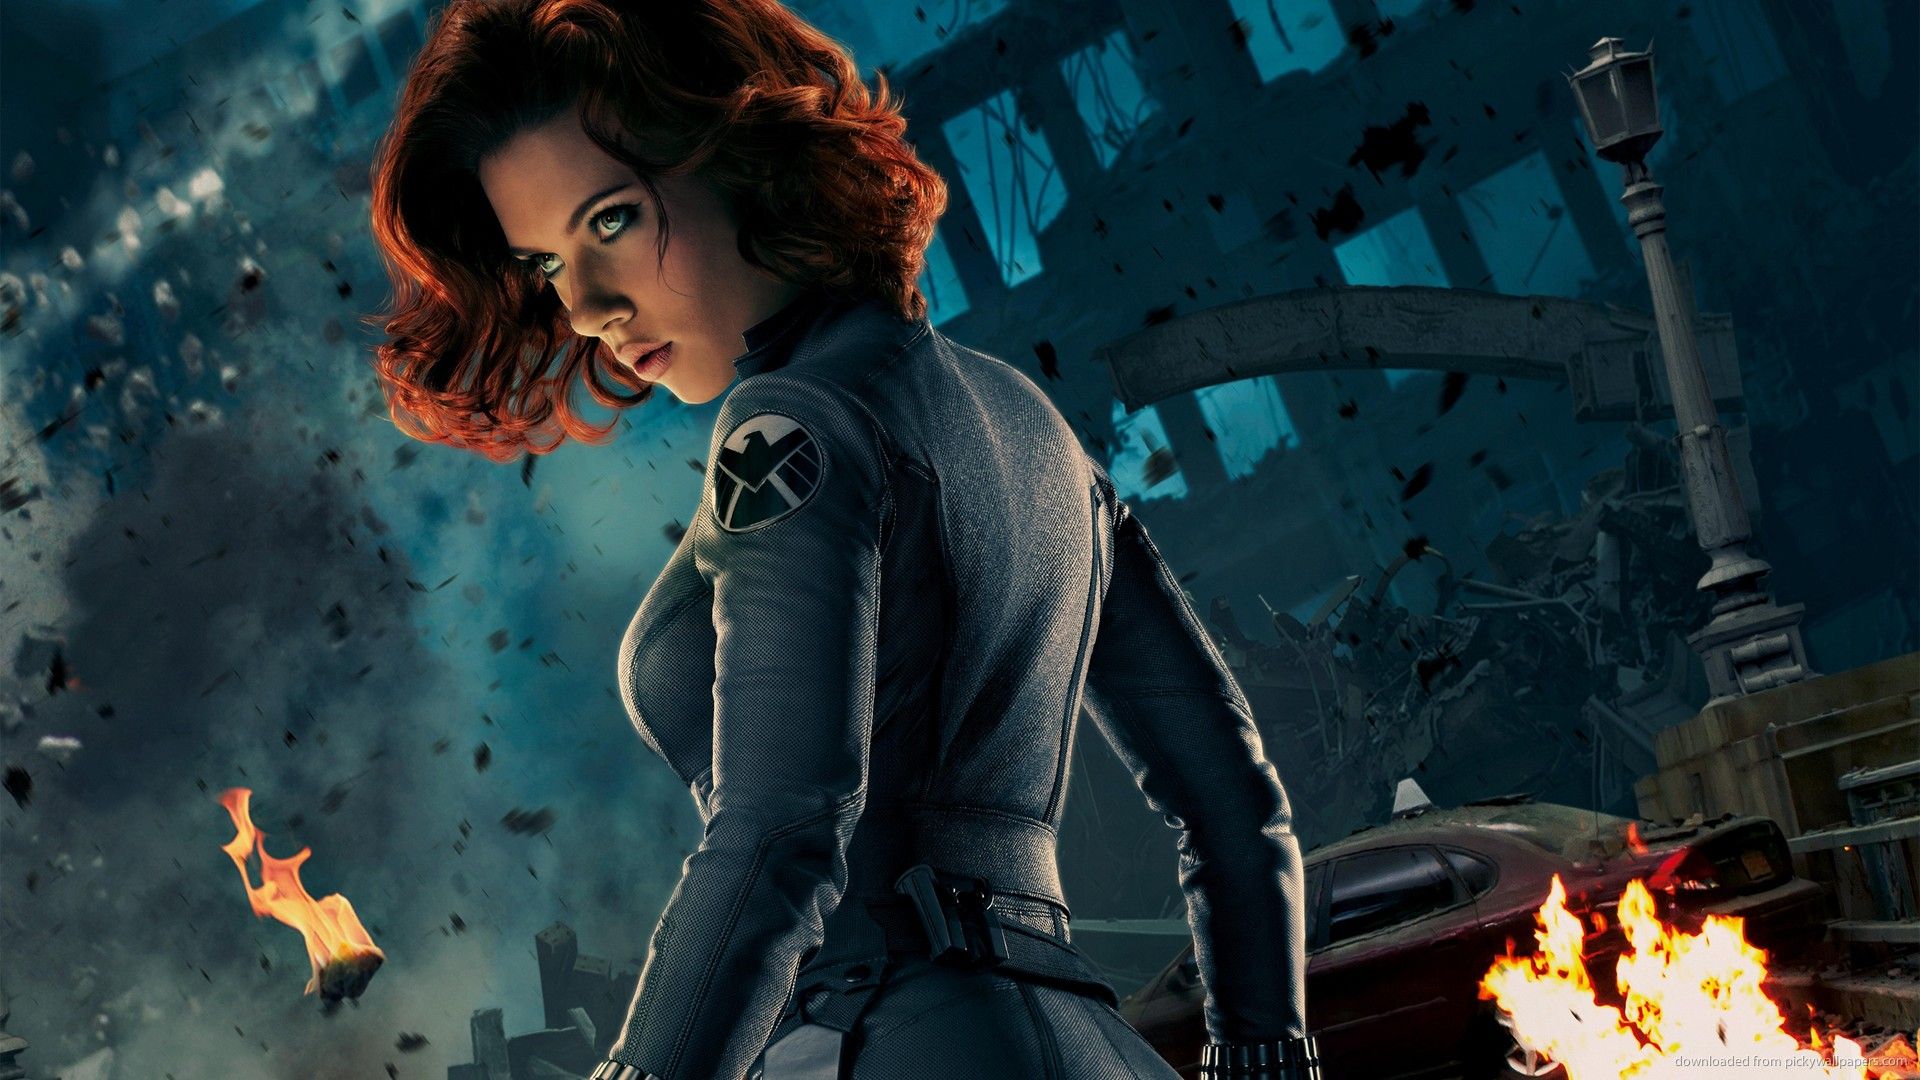 Natasha Romanoff as Black Widow in Marvel Super War Wallpapers